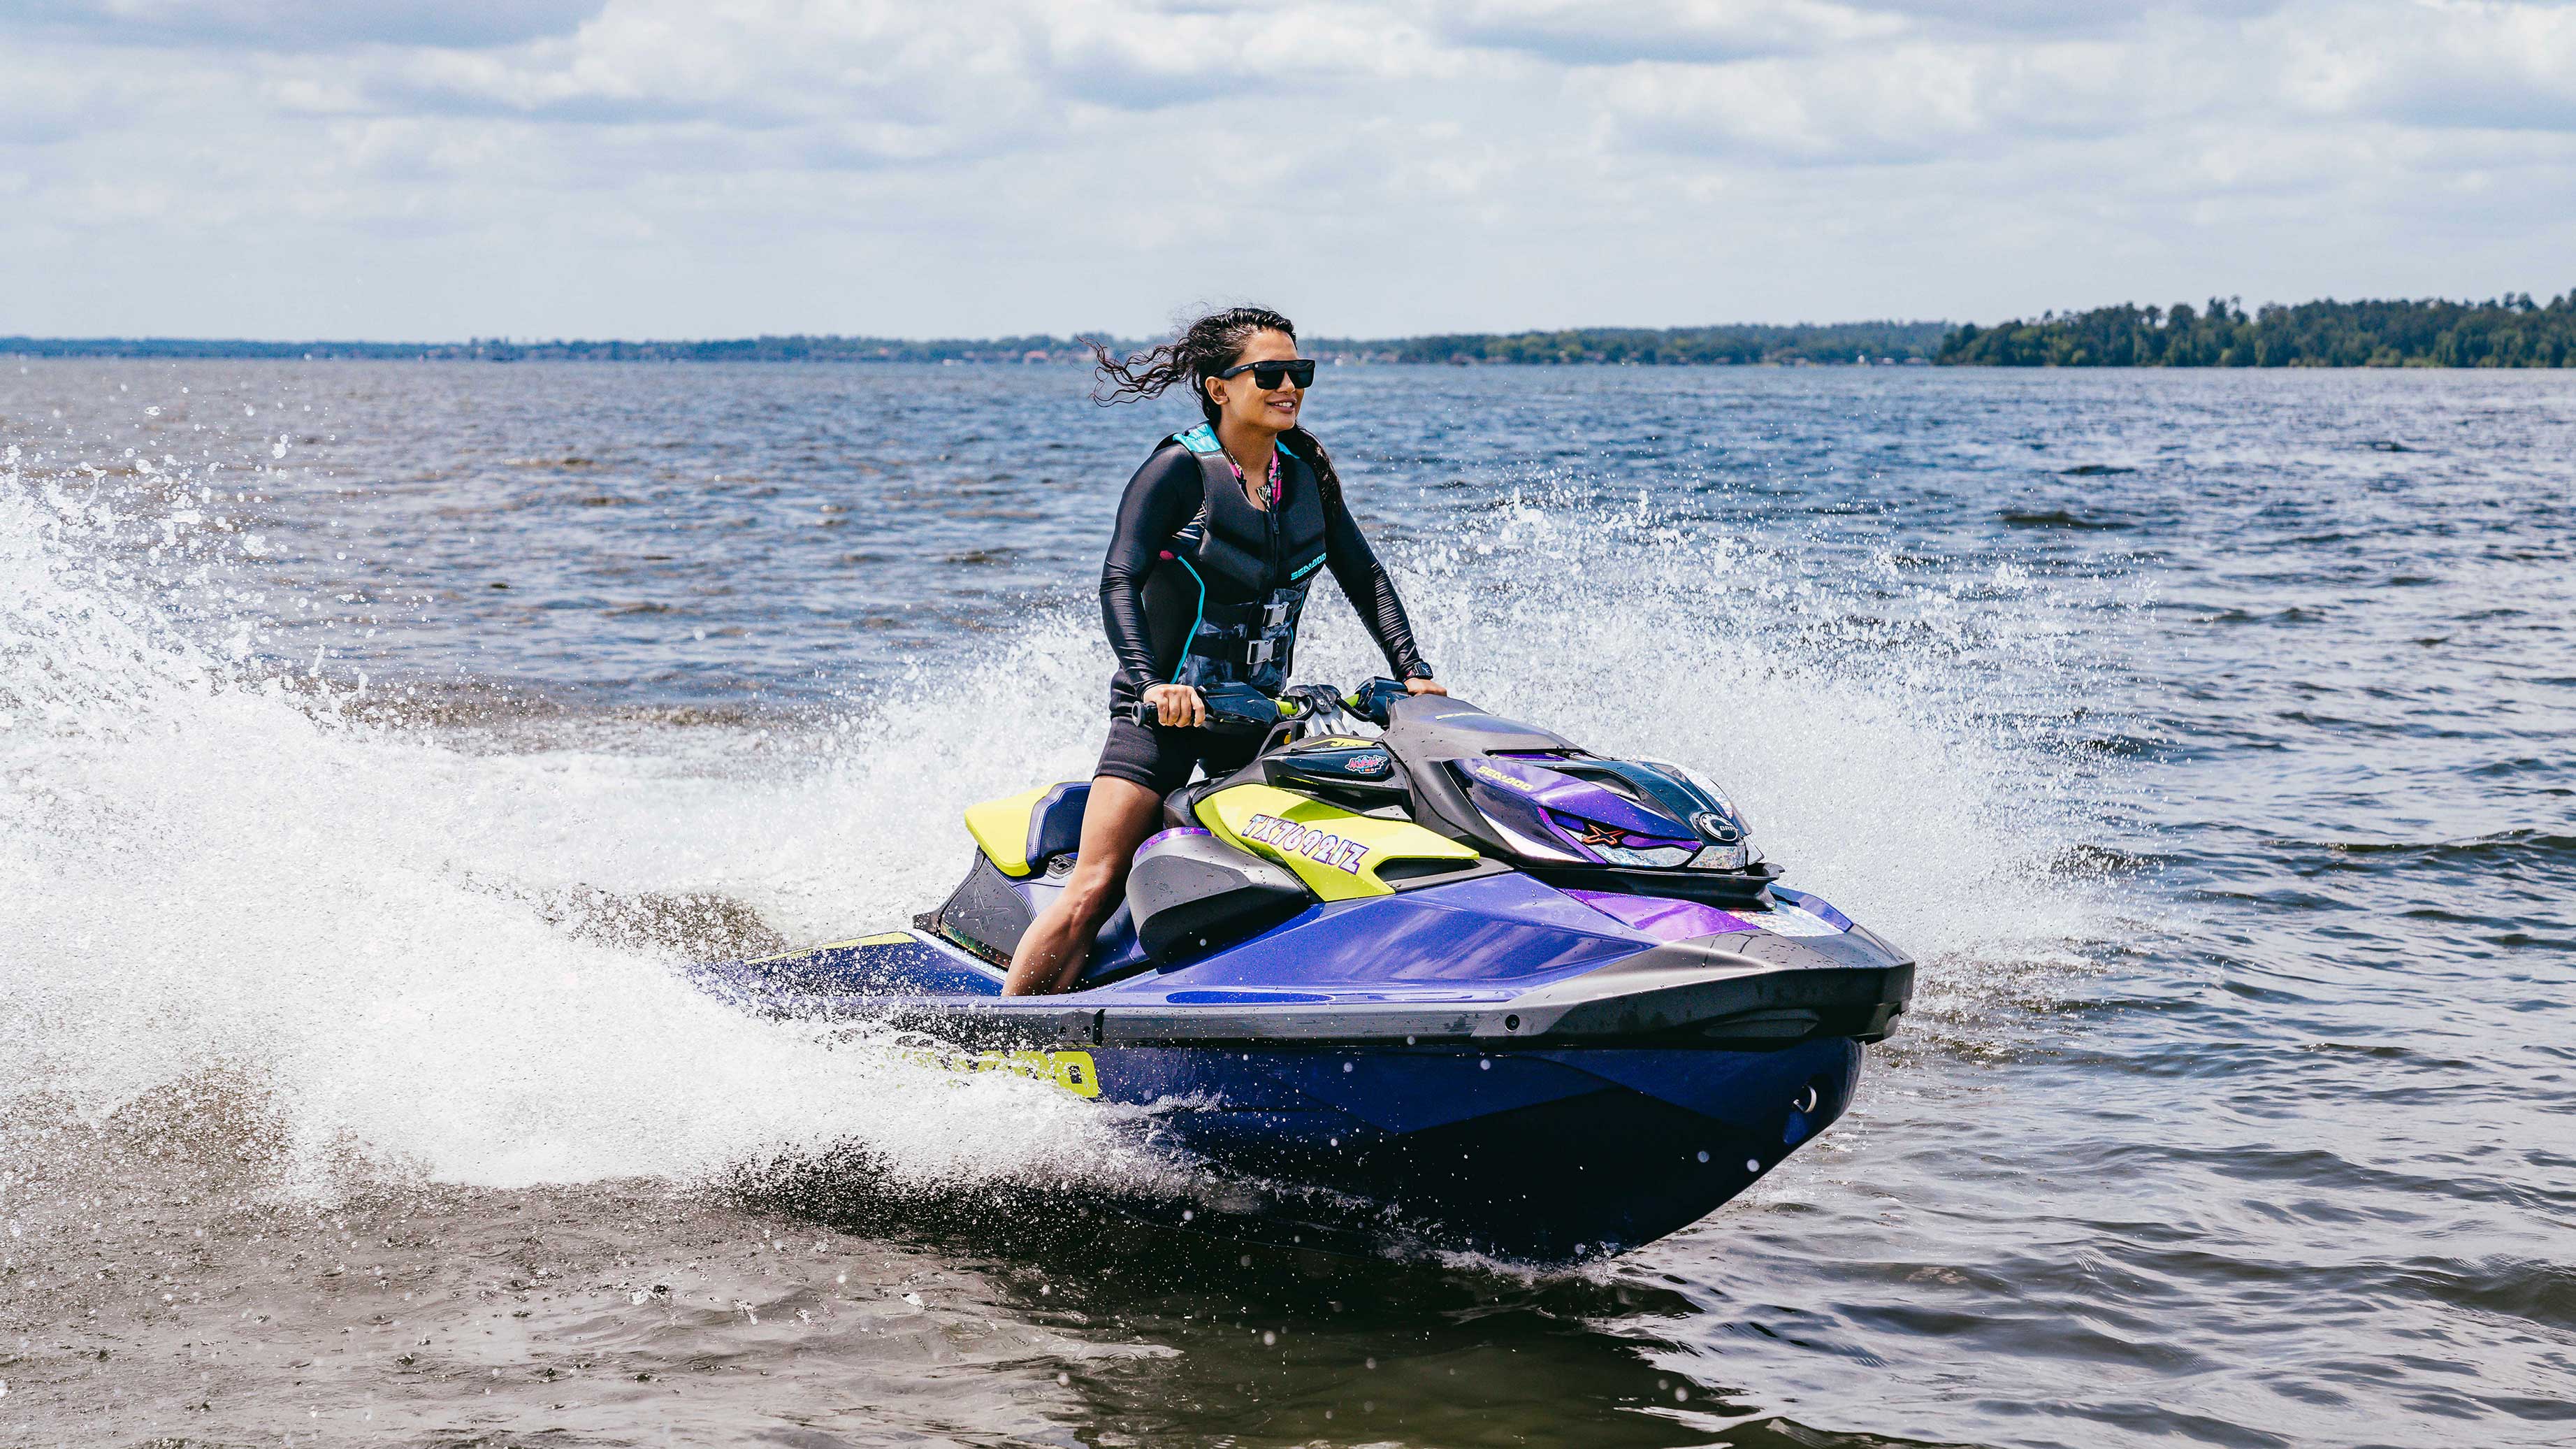 Sea-Doo Ambassador Alvean Azurin riding responsibly on her Sea-Doo watercraft